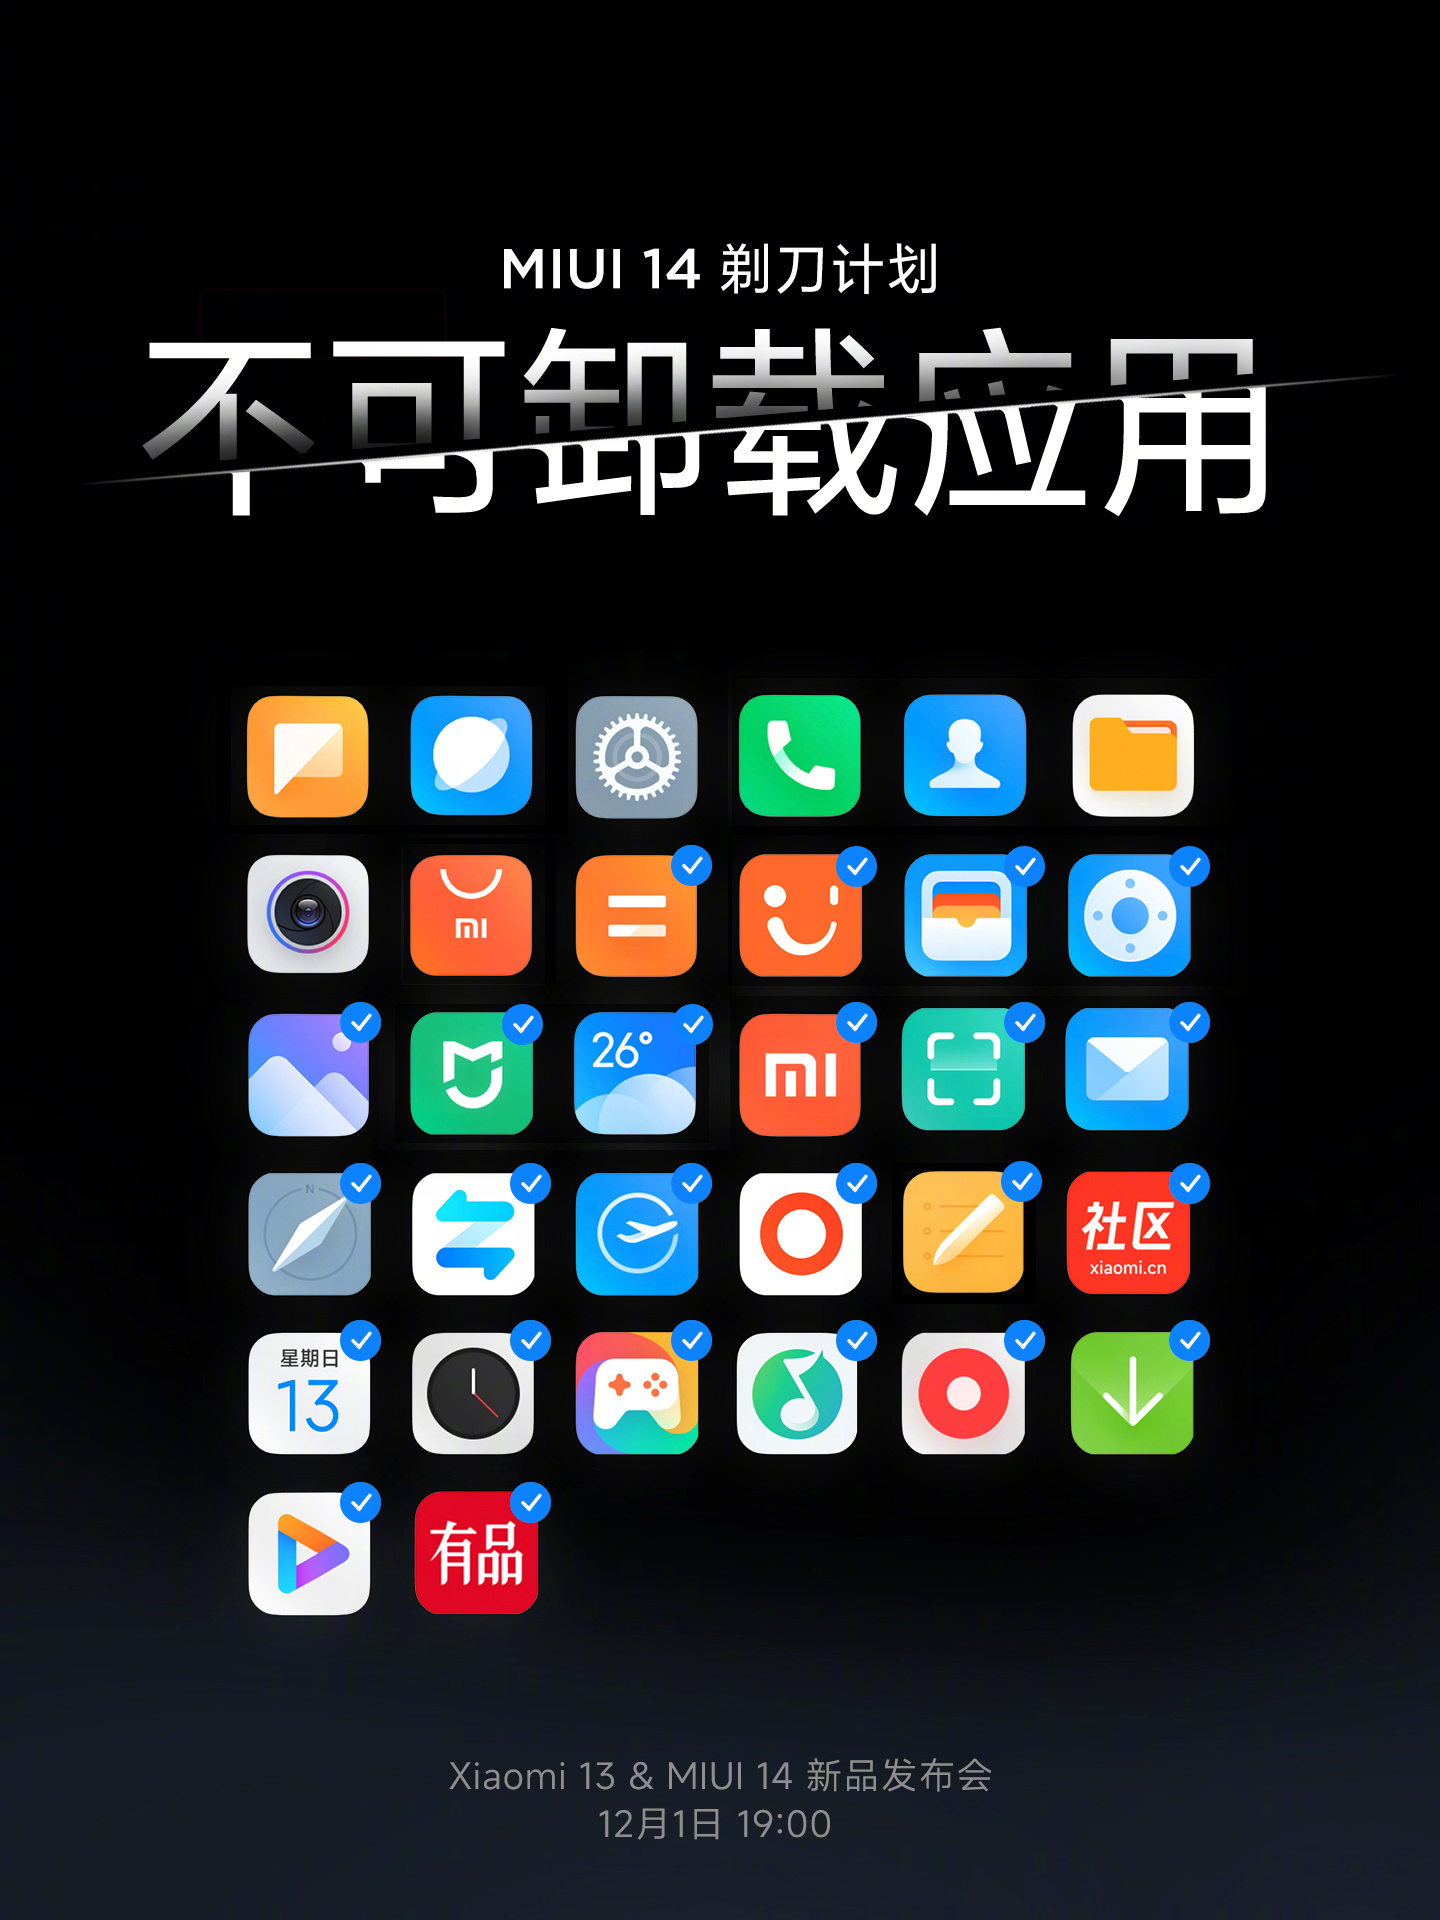 Miui 14 полная. Миуи 14. Xiaomi MIUI 13. Xiaomi MIUI 14. Xiaomi 13 оболочка.